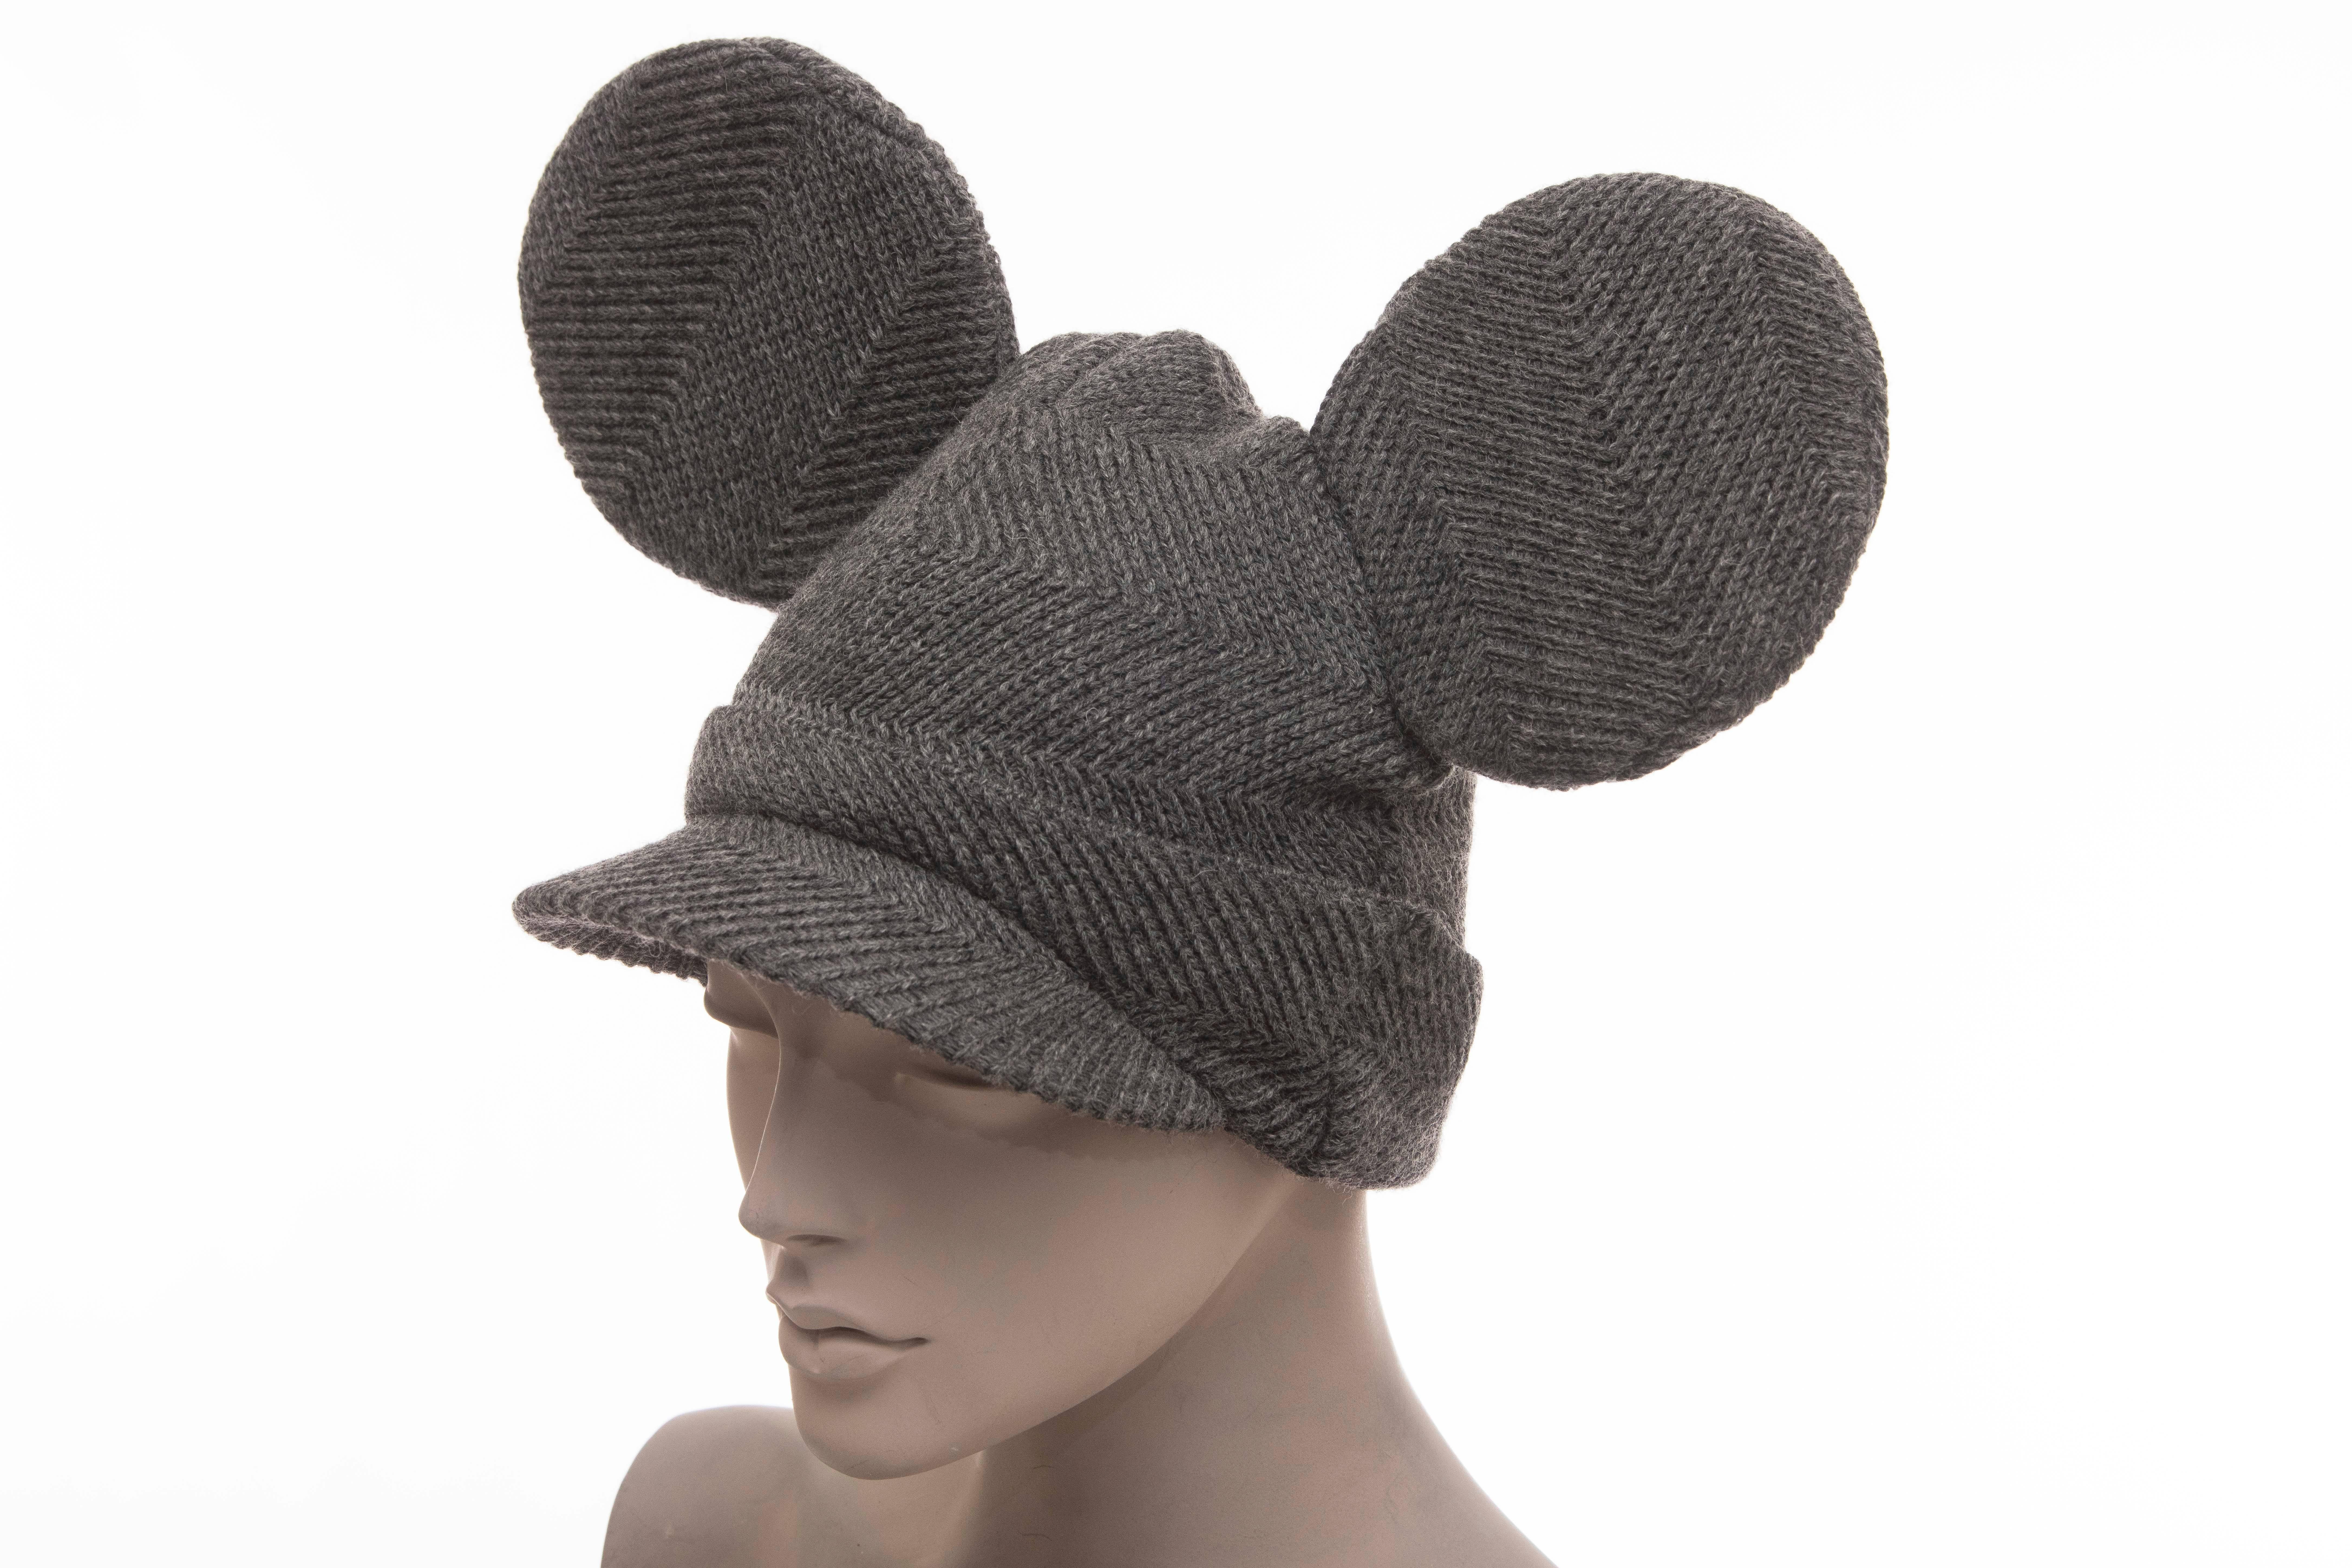 Men's Comme des Garcons Stephen Jones Grey Wool Herringbone Mouse Ears Hat, Fall 2013